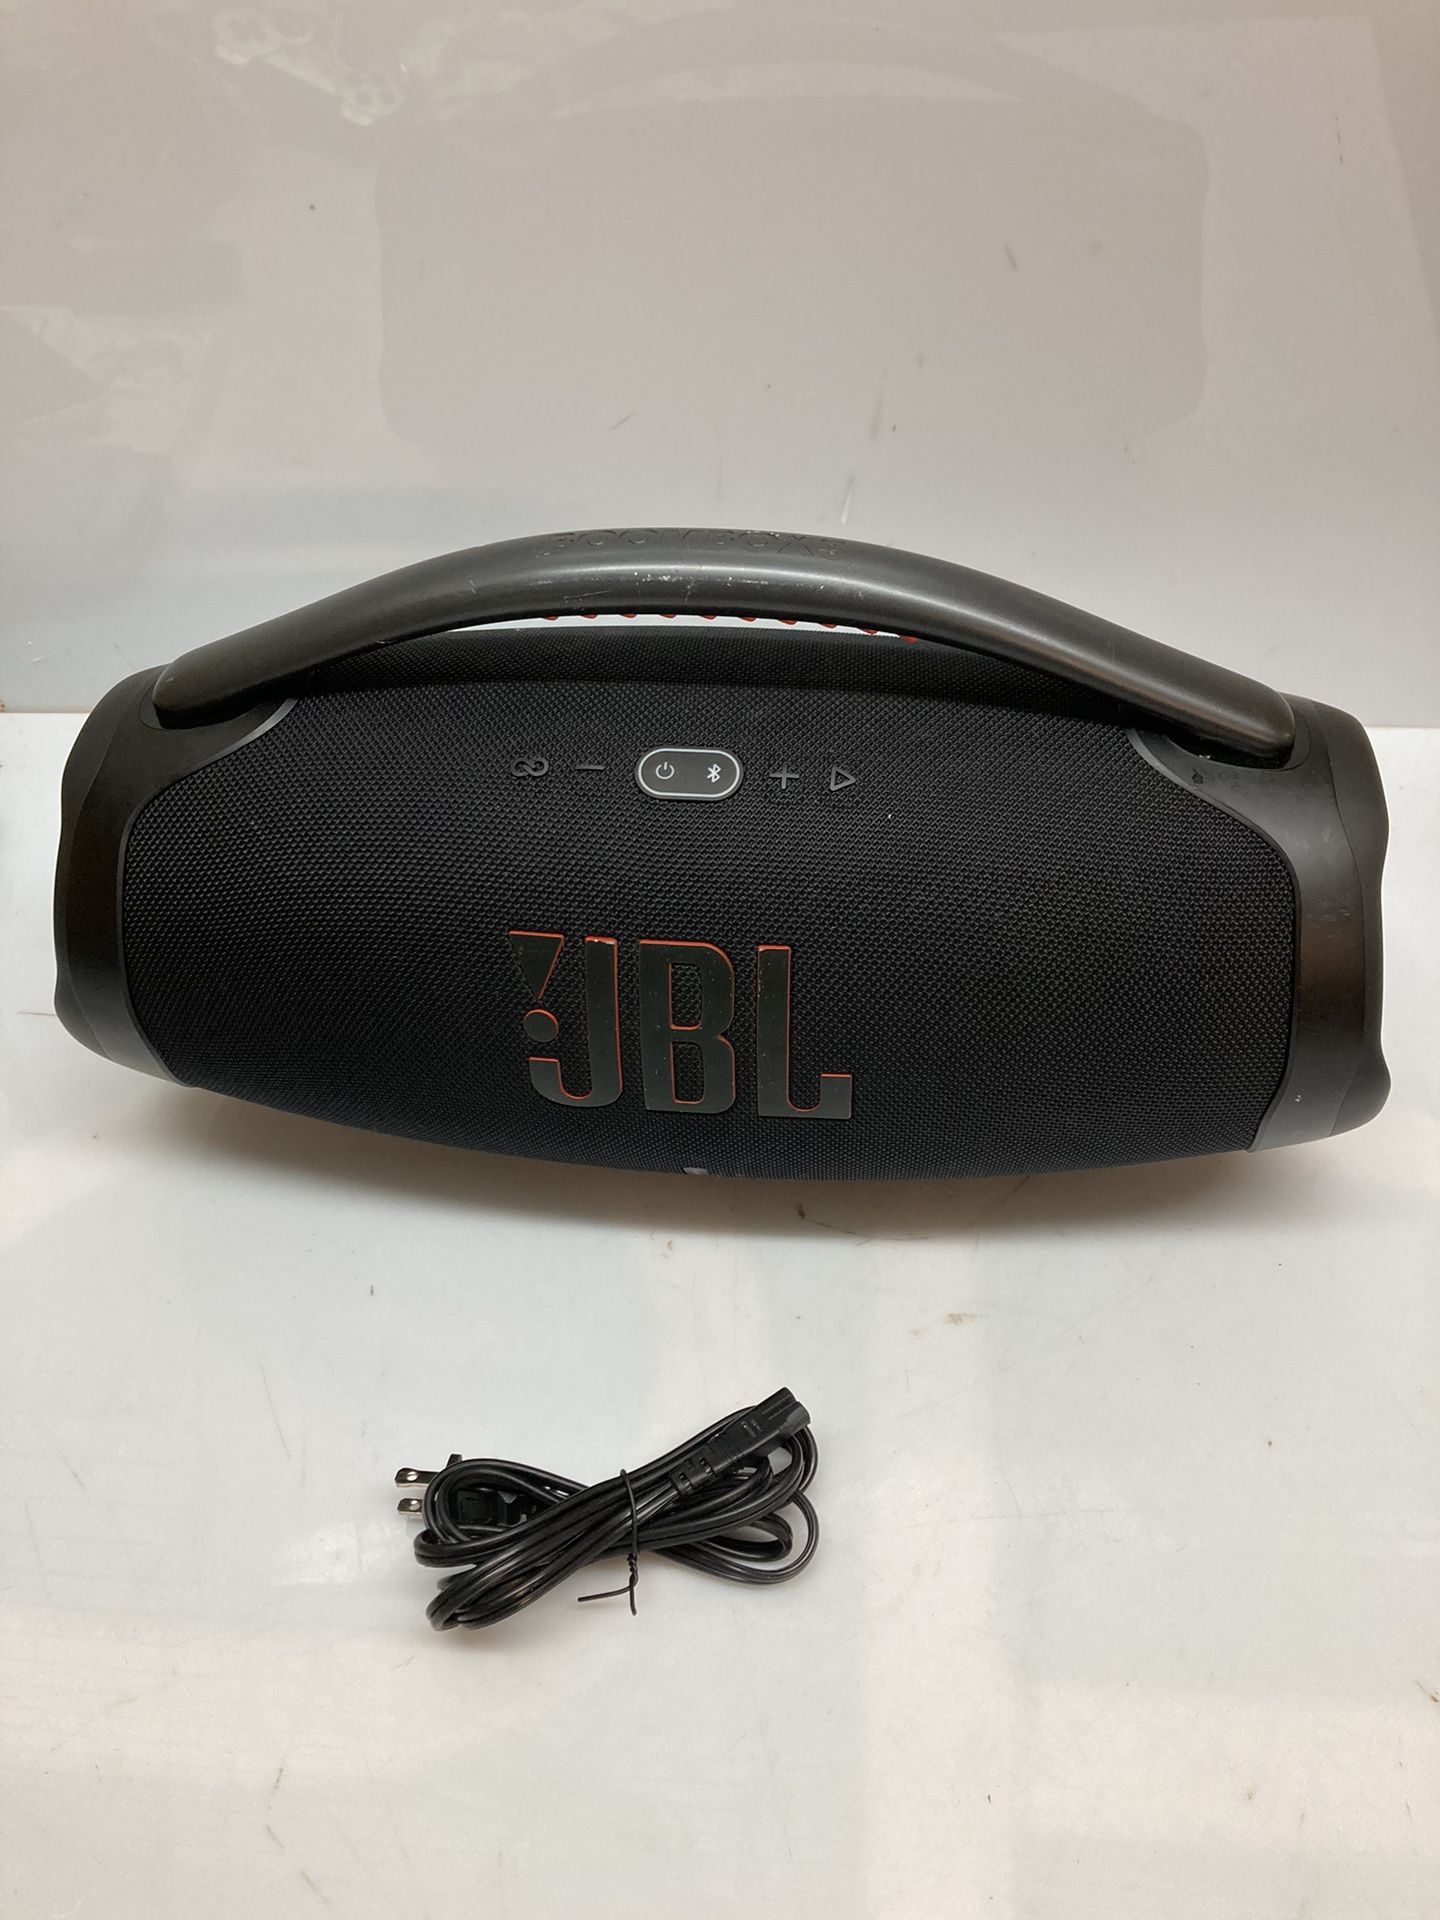 Jbl Boom Box 3 Portable Bluetooth Speaker Waterproof 